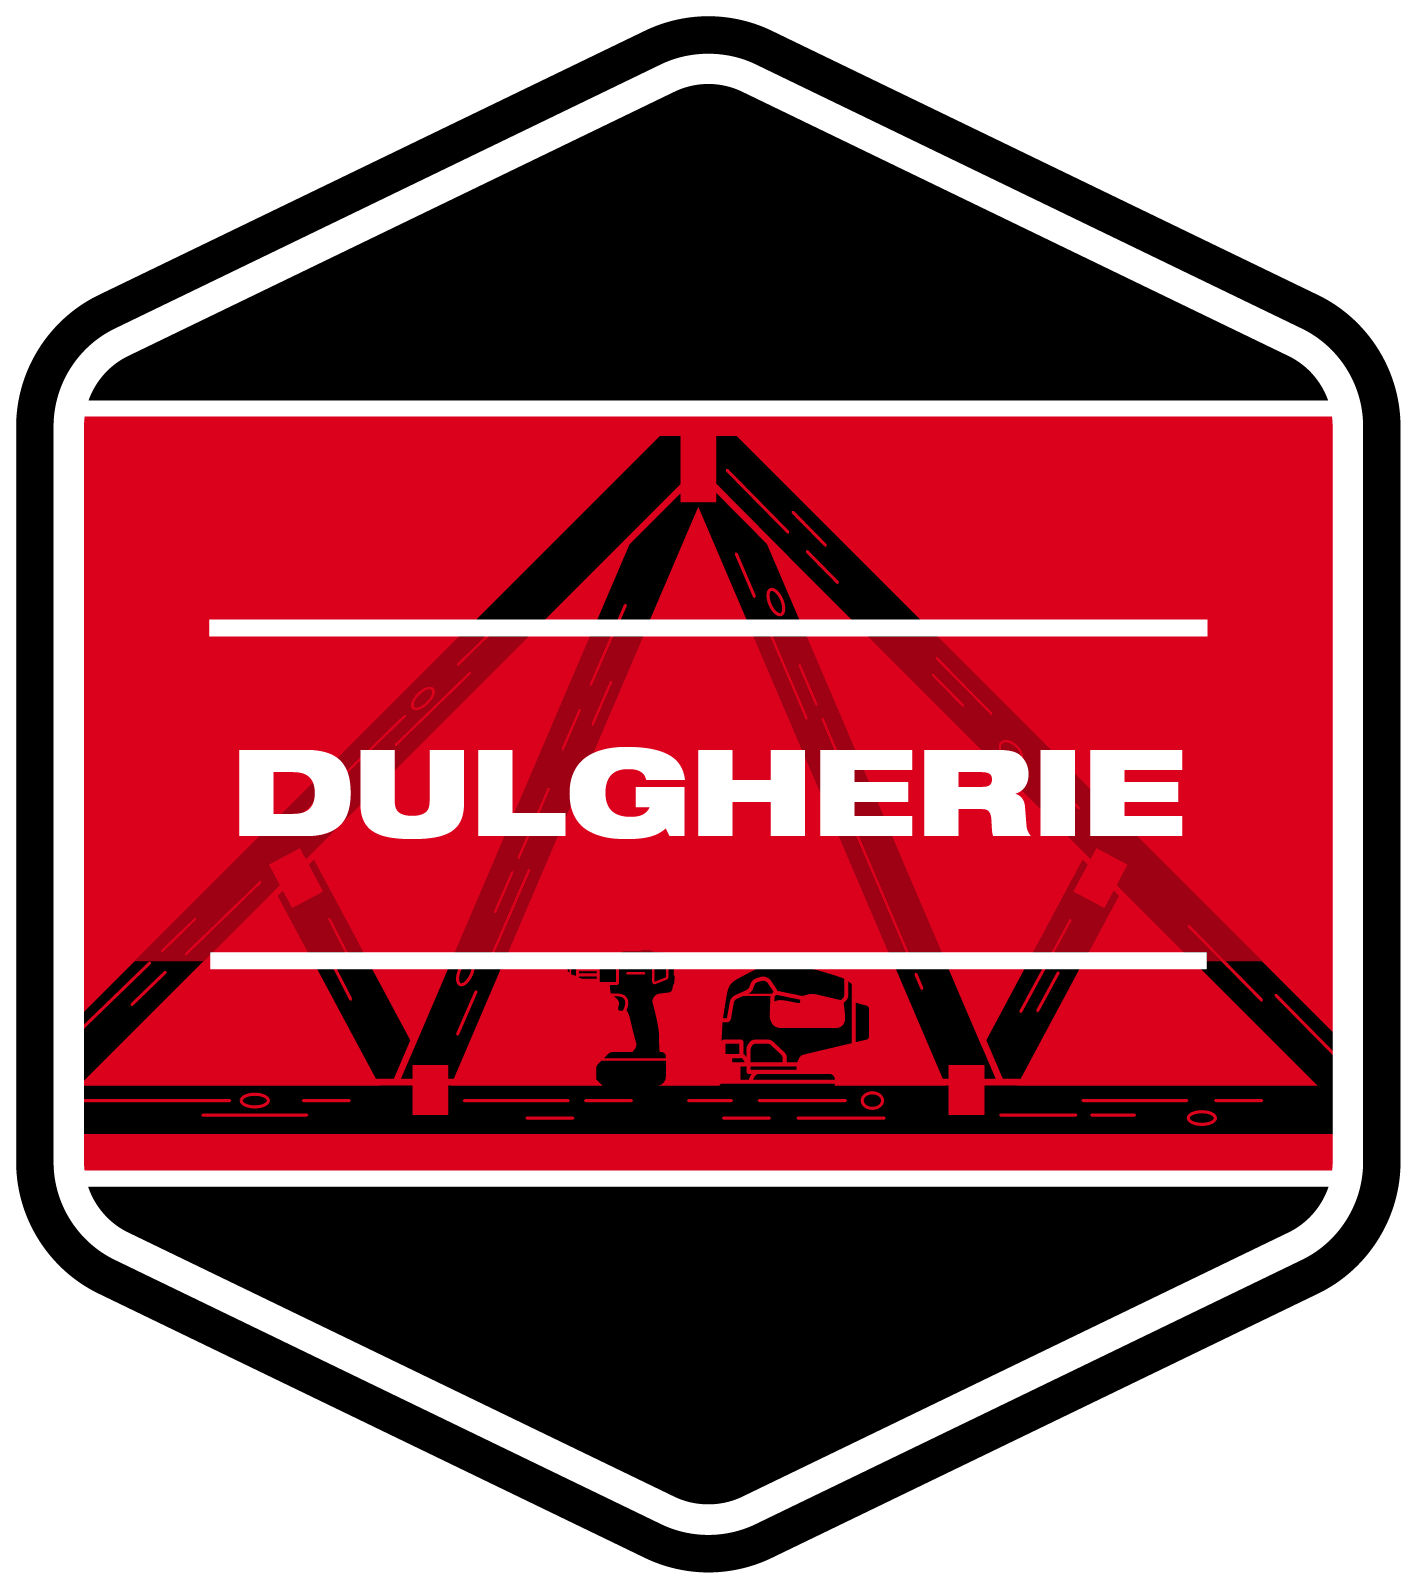 Dulgherie